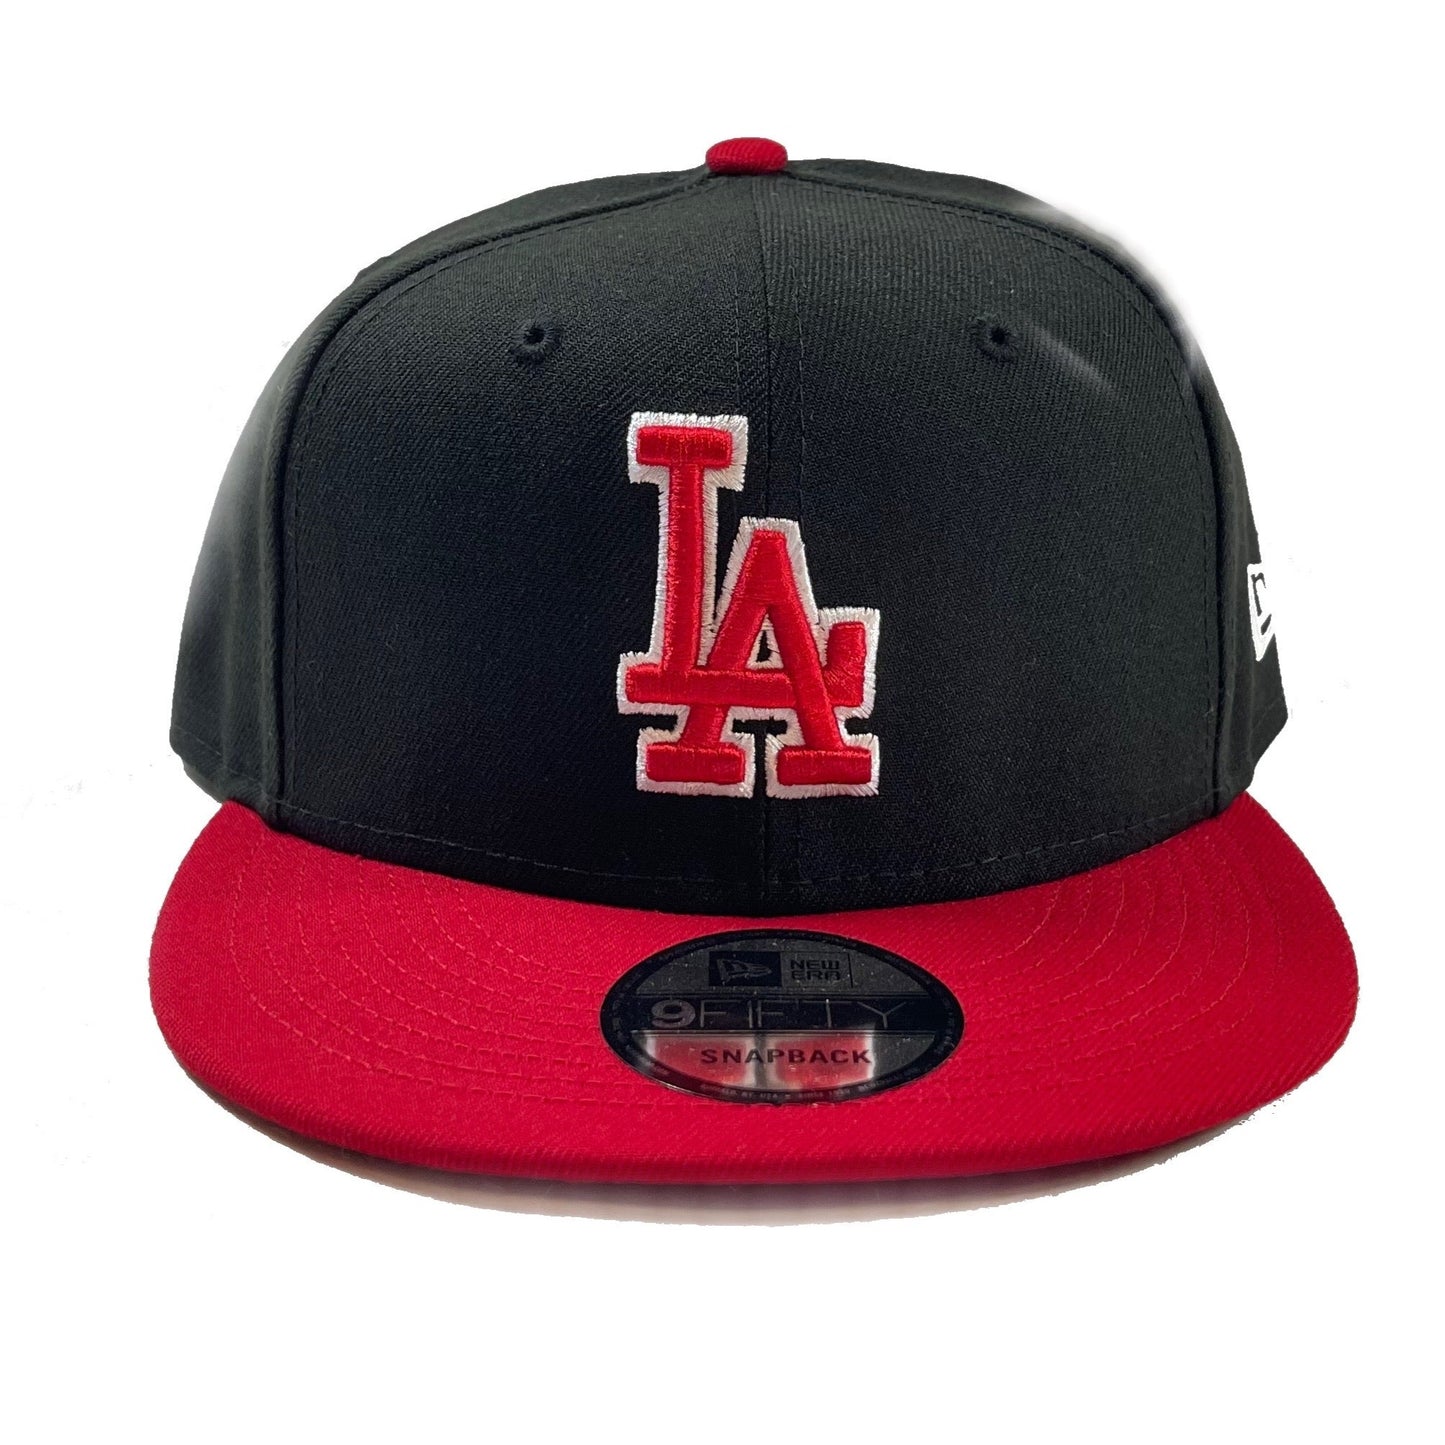 Los Angeles Dodgers (Red/Black) Snapback